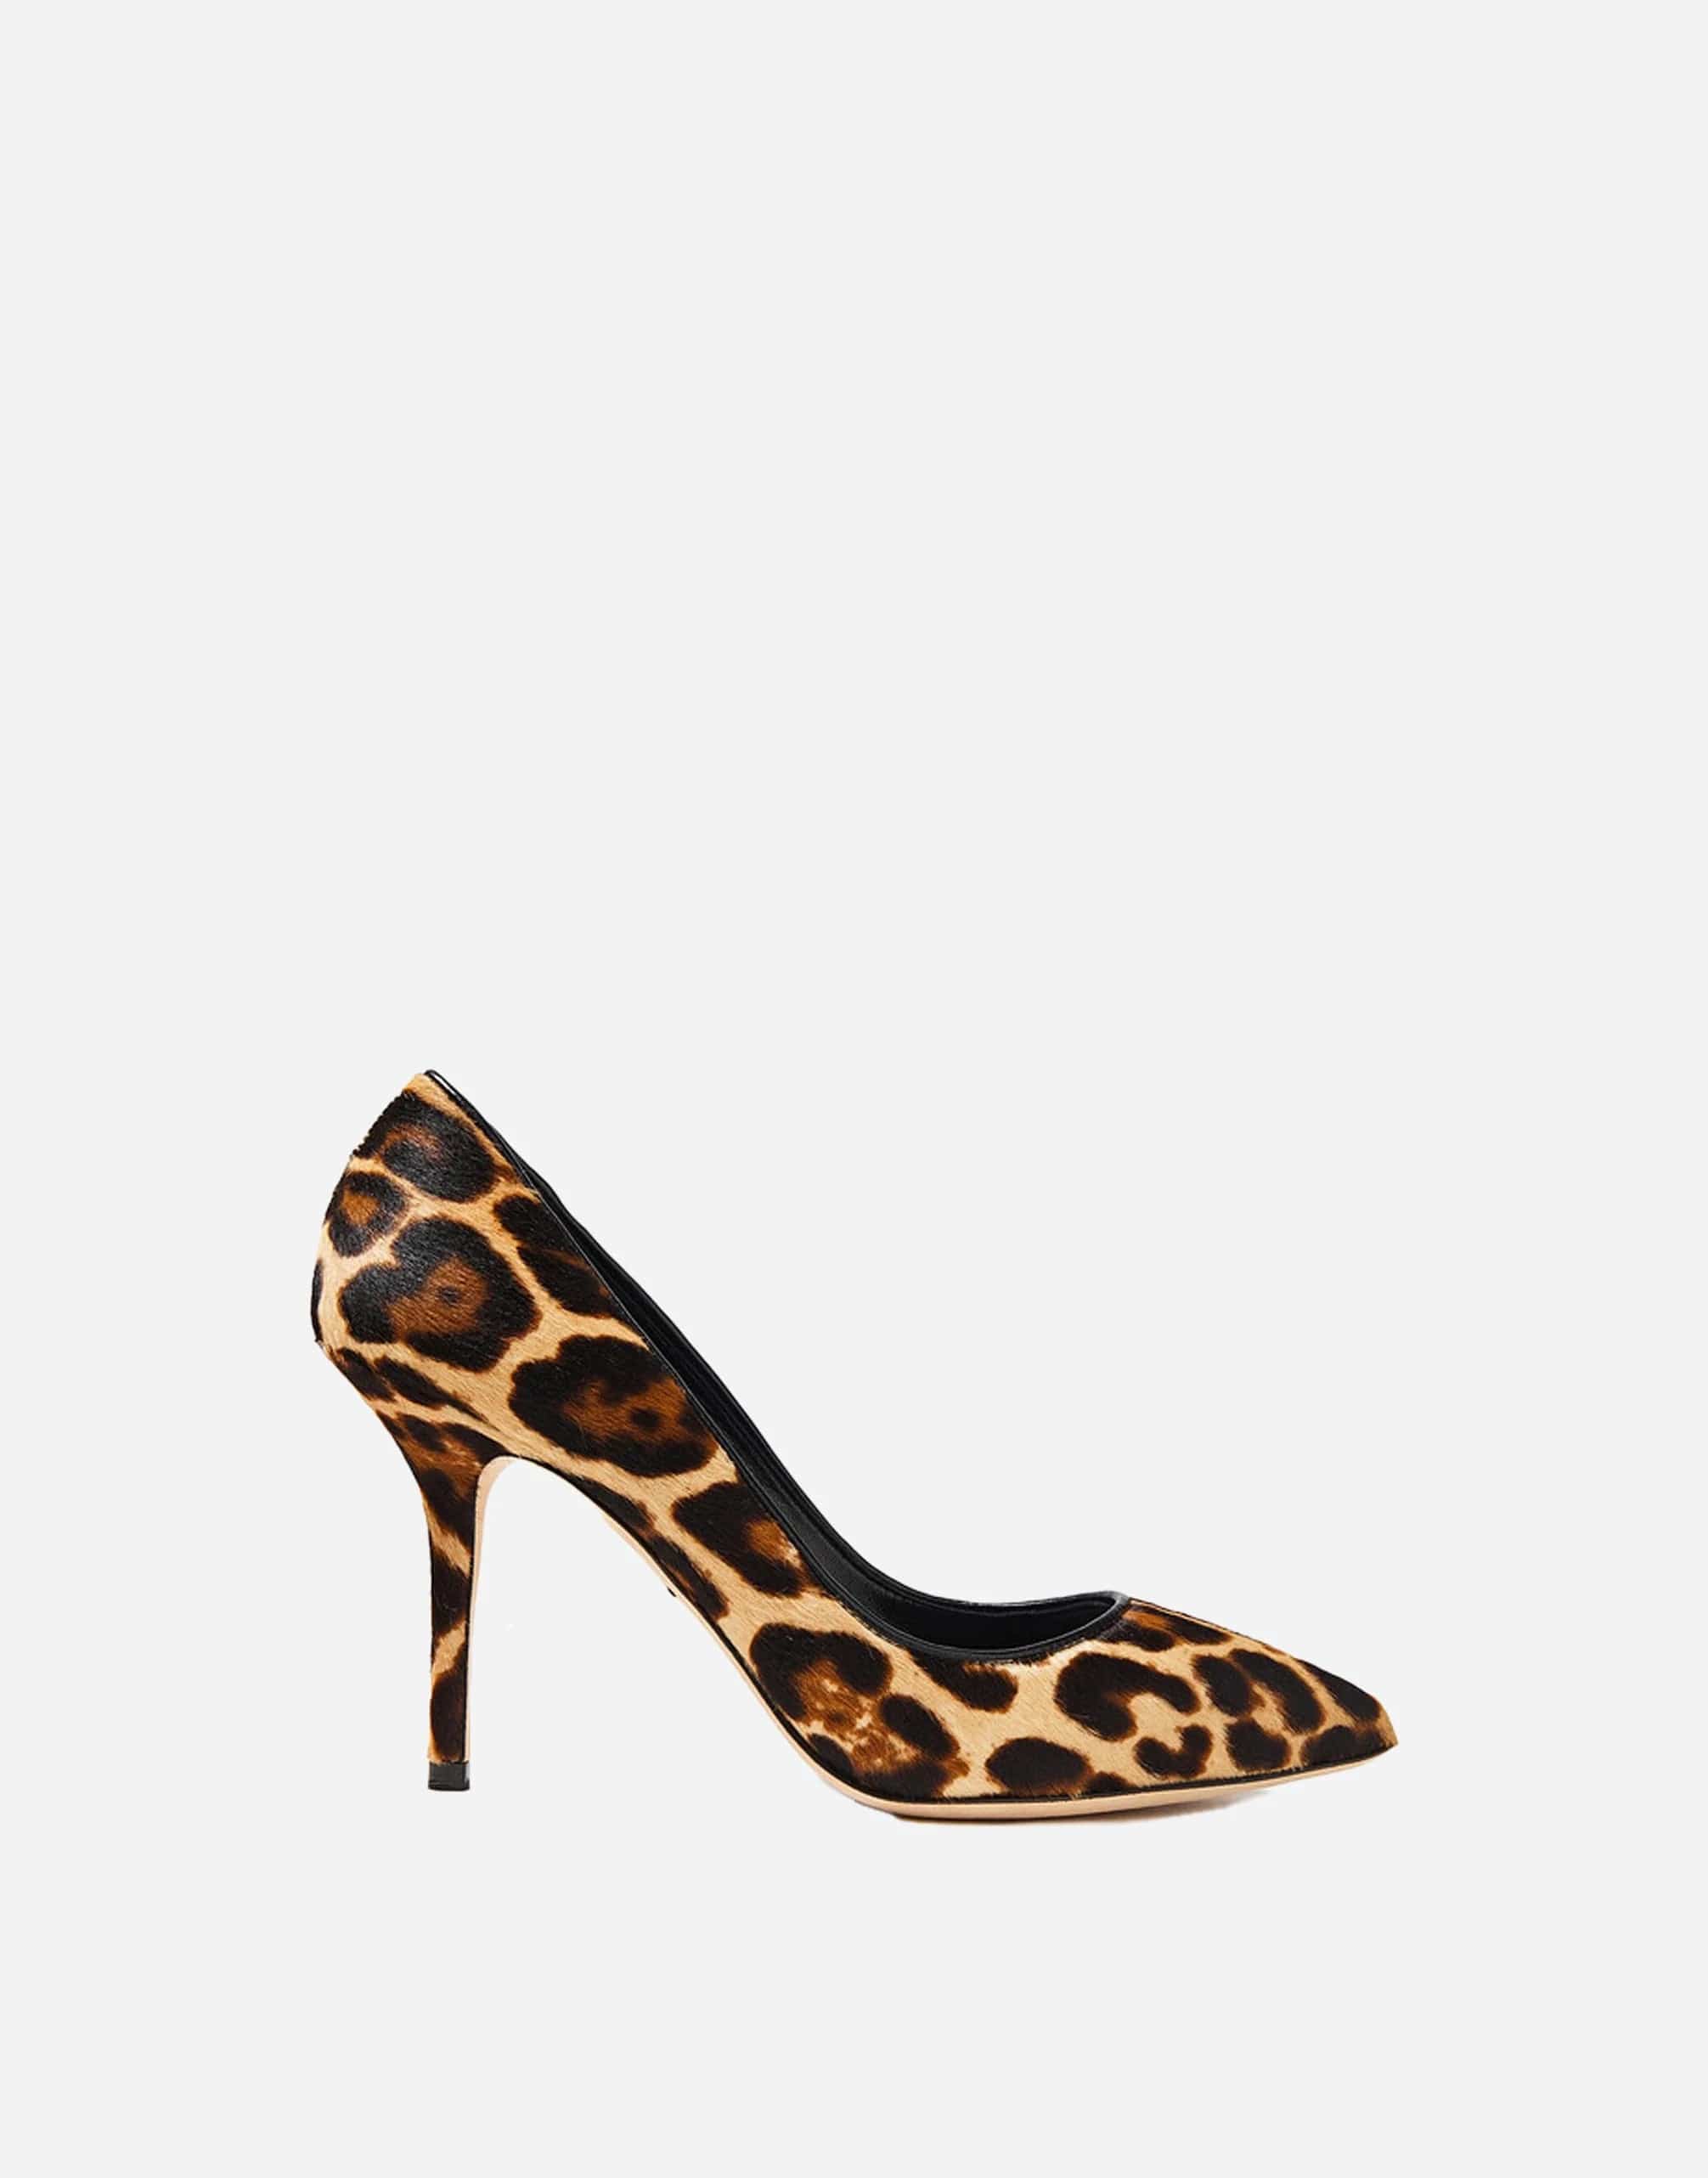 Dolce & Gabbana Leopard-Print Pumps